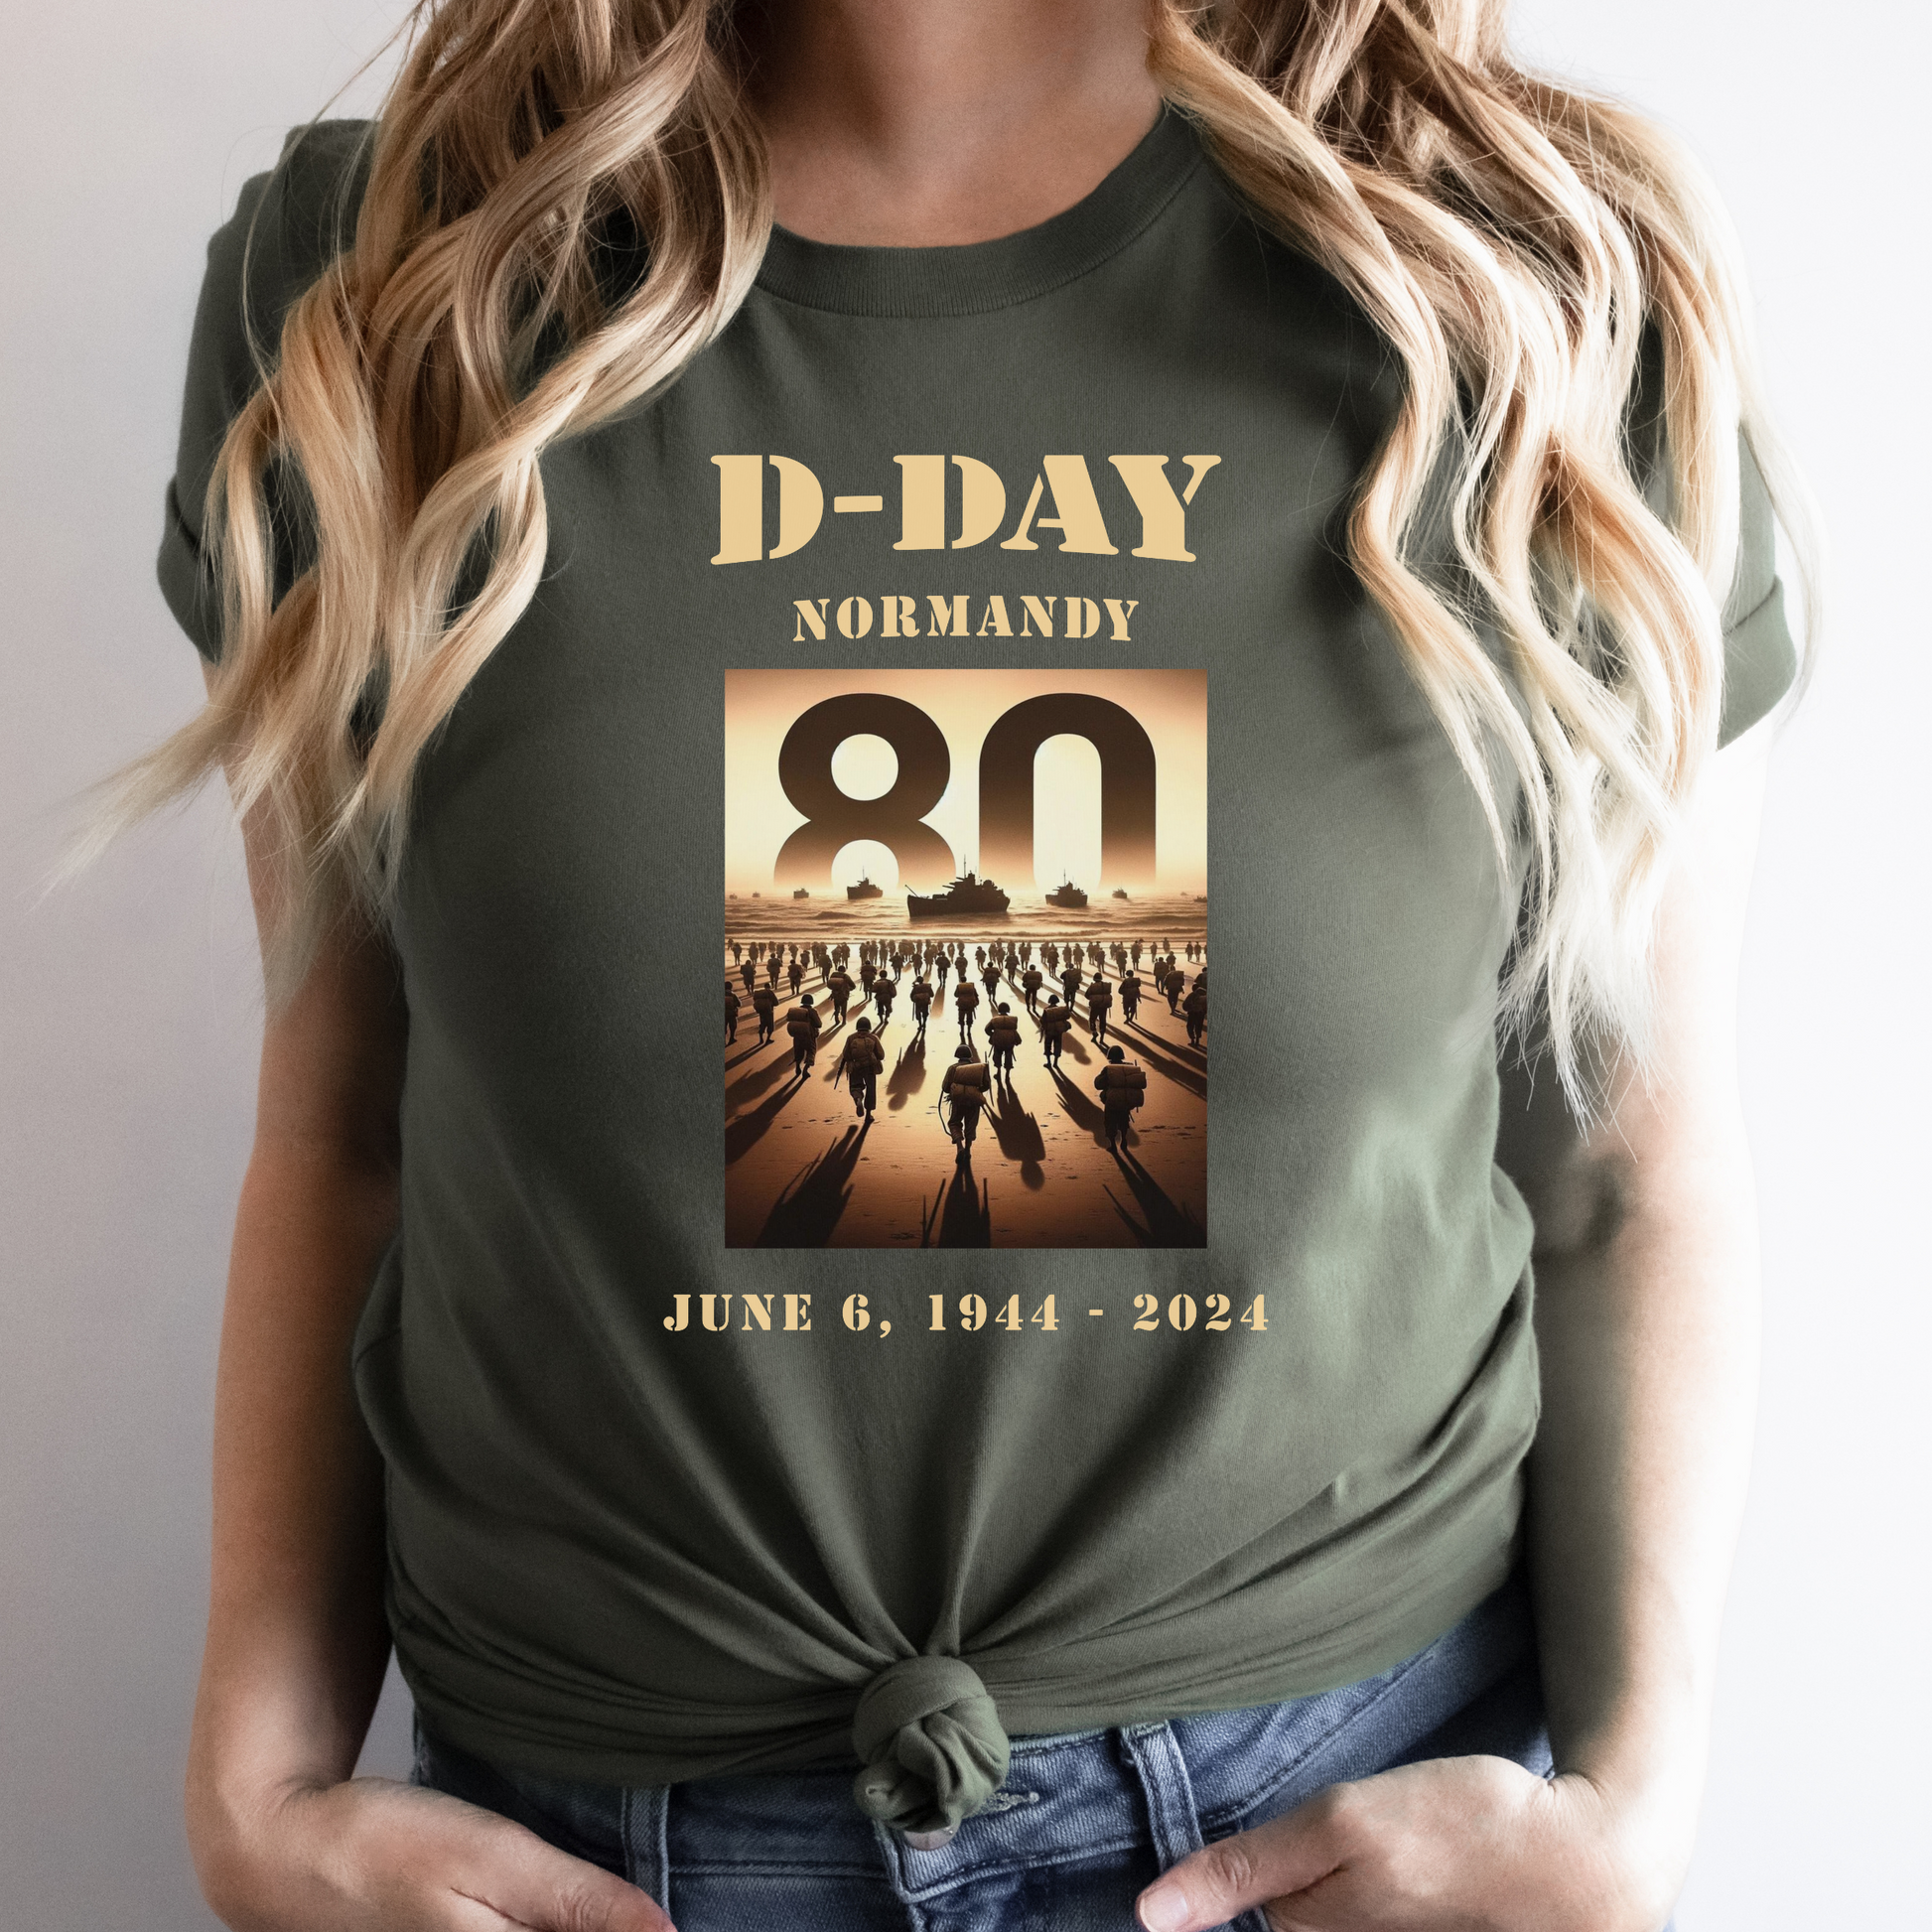 D-Day Normandy 80th Anniversary T-Shirt - Military History Tee - Mardonyx T-Shirt XS / Army